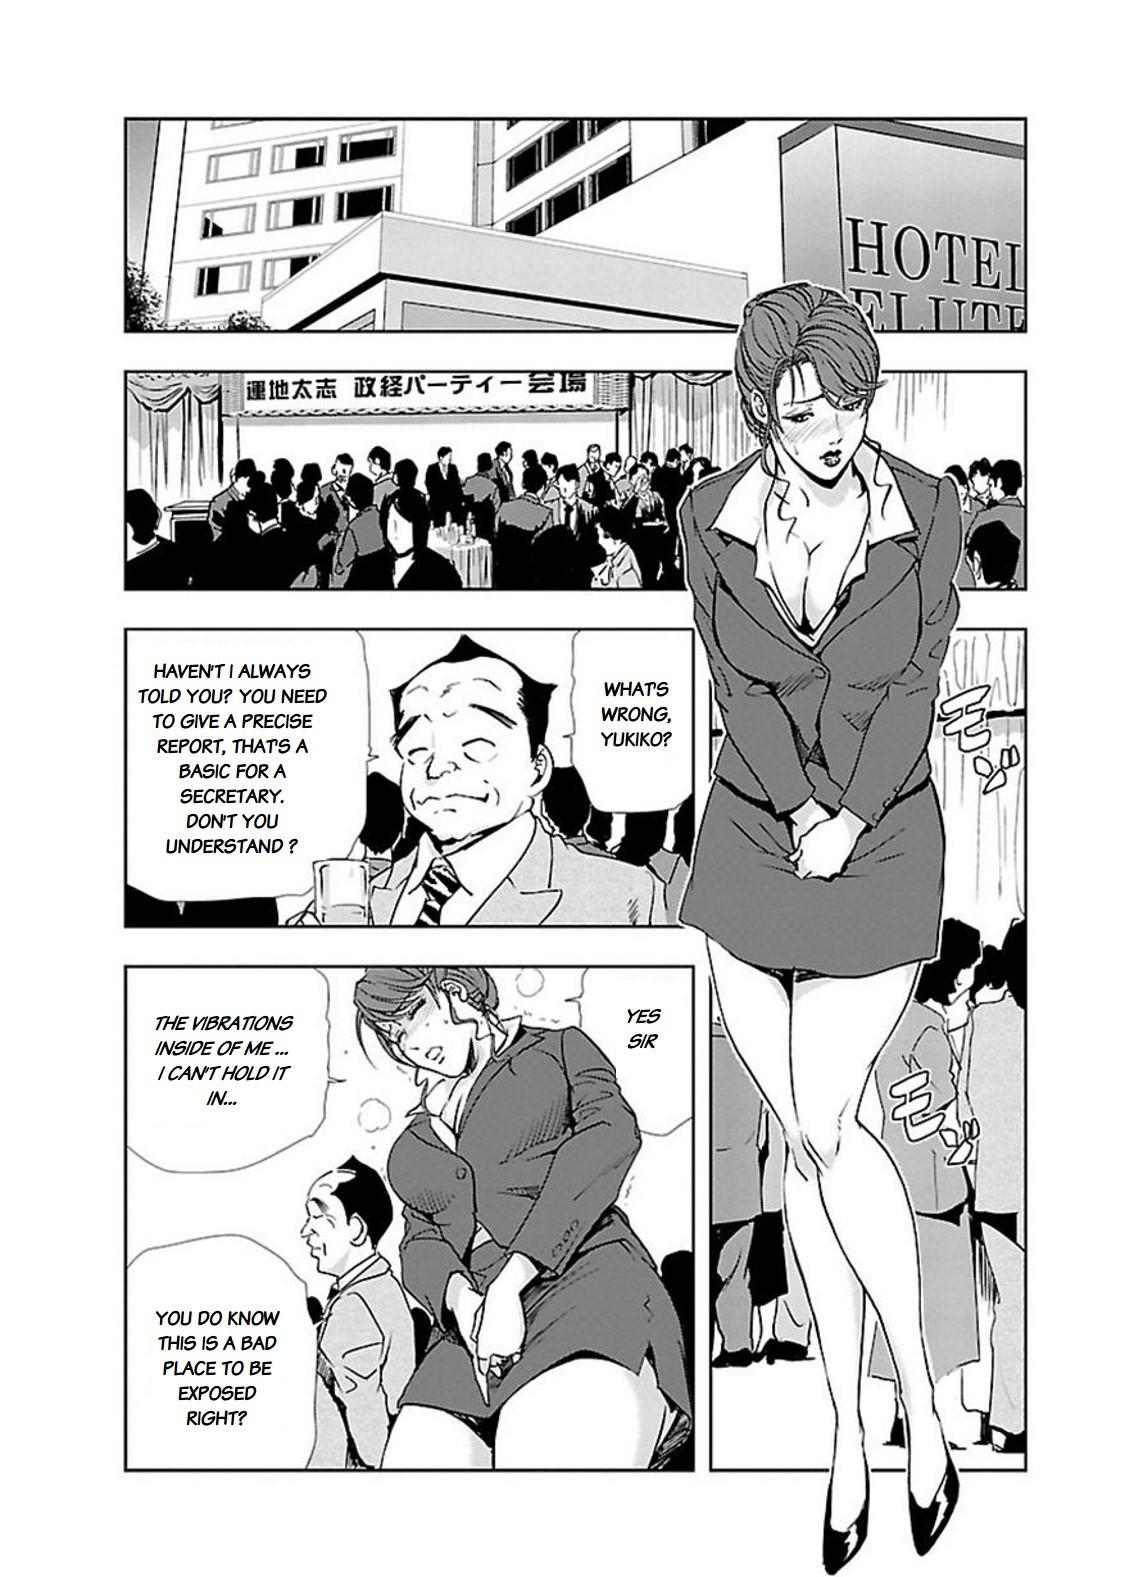 Short Nikuhisyo Yukiko chapter 12  - Page 2